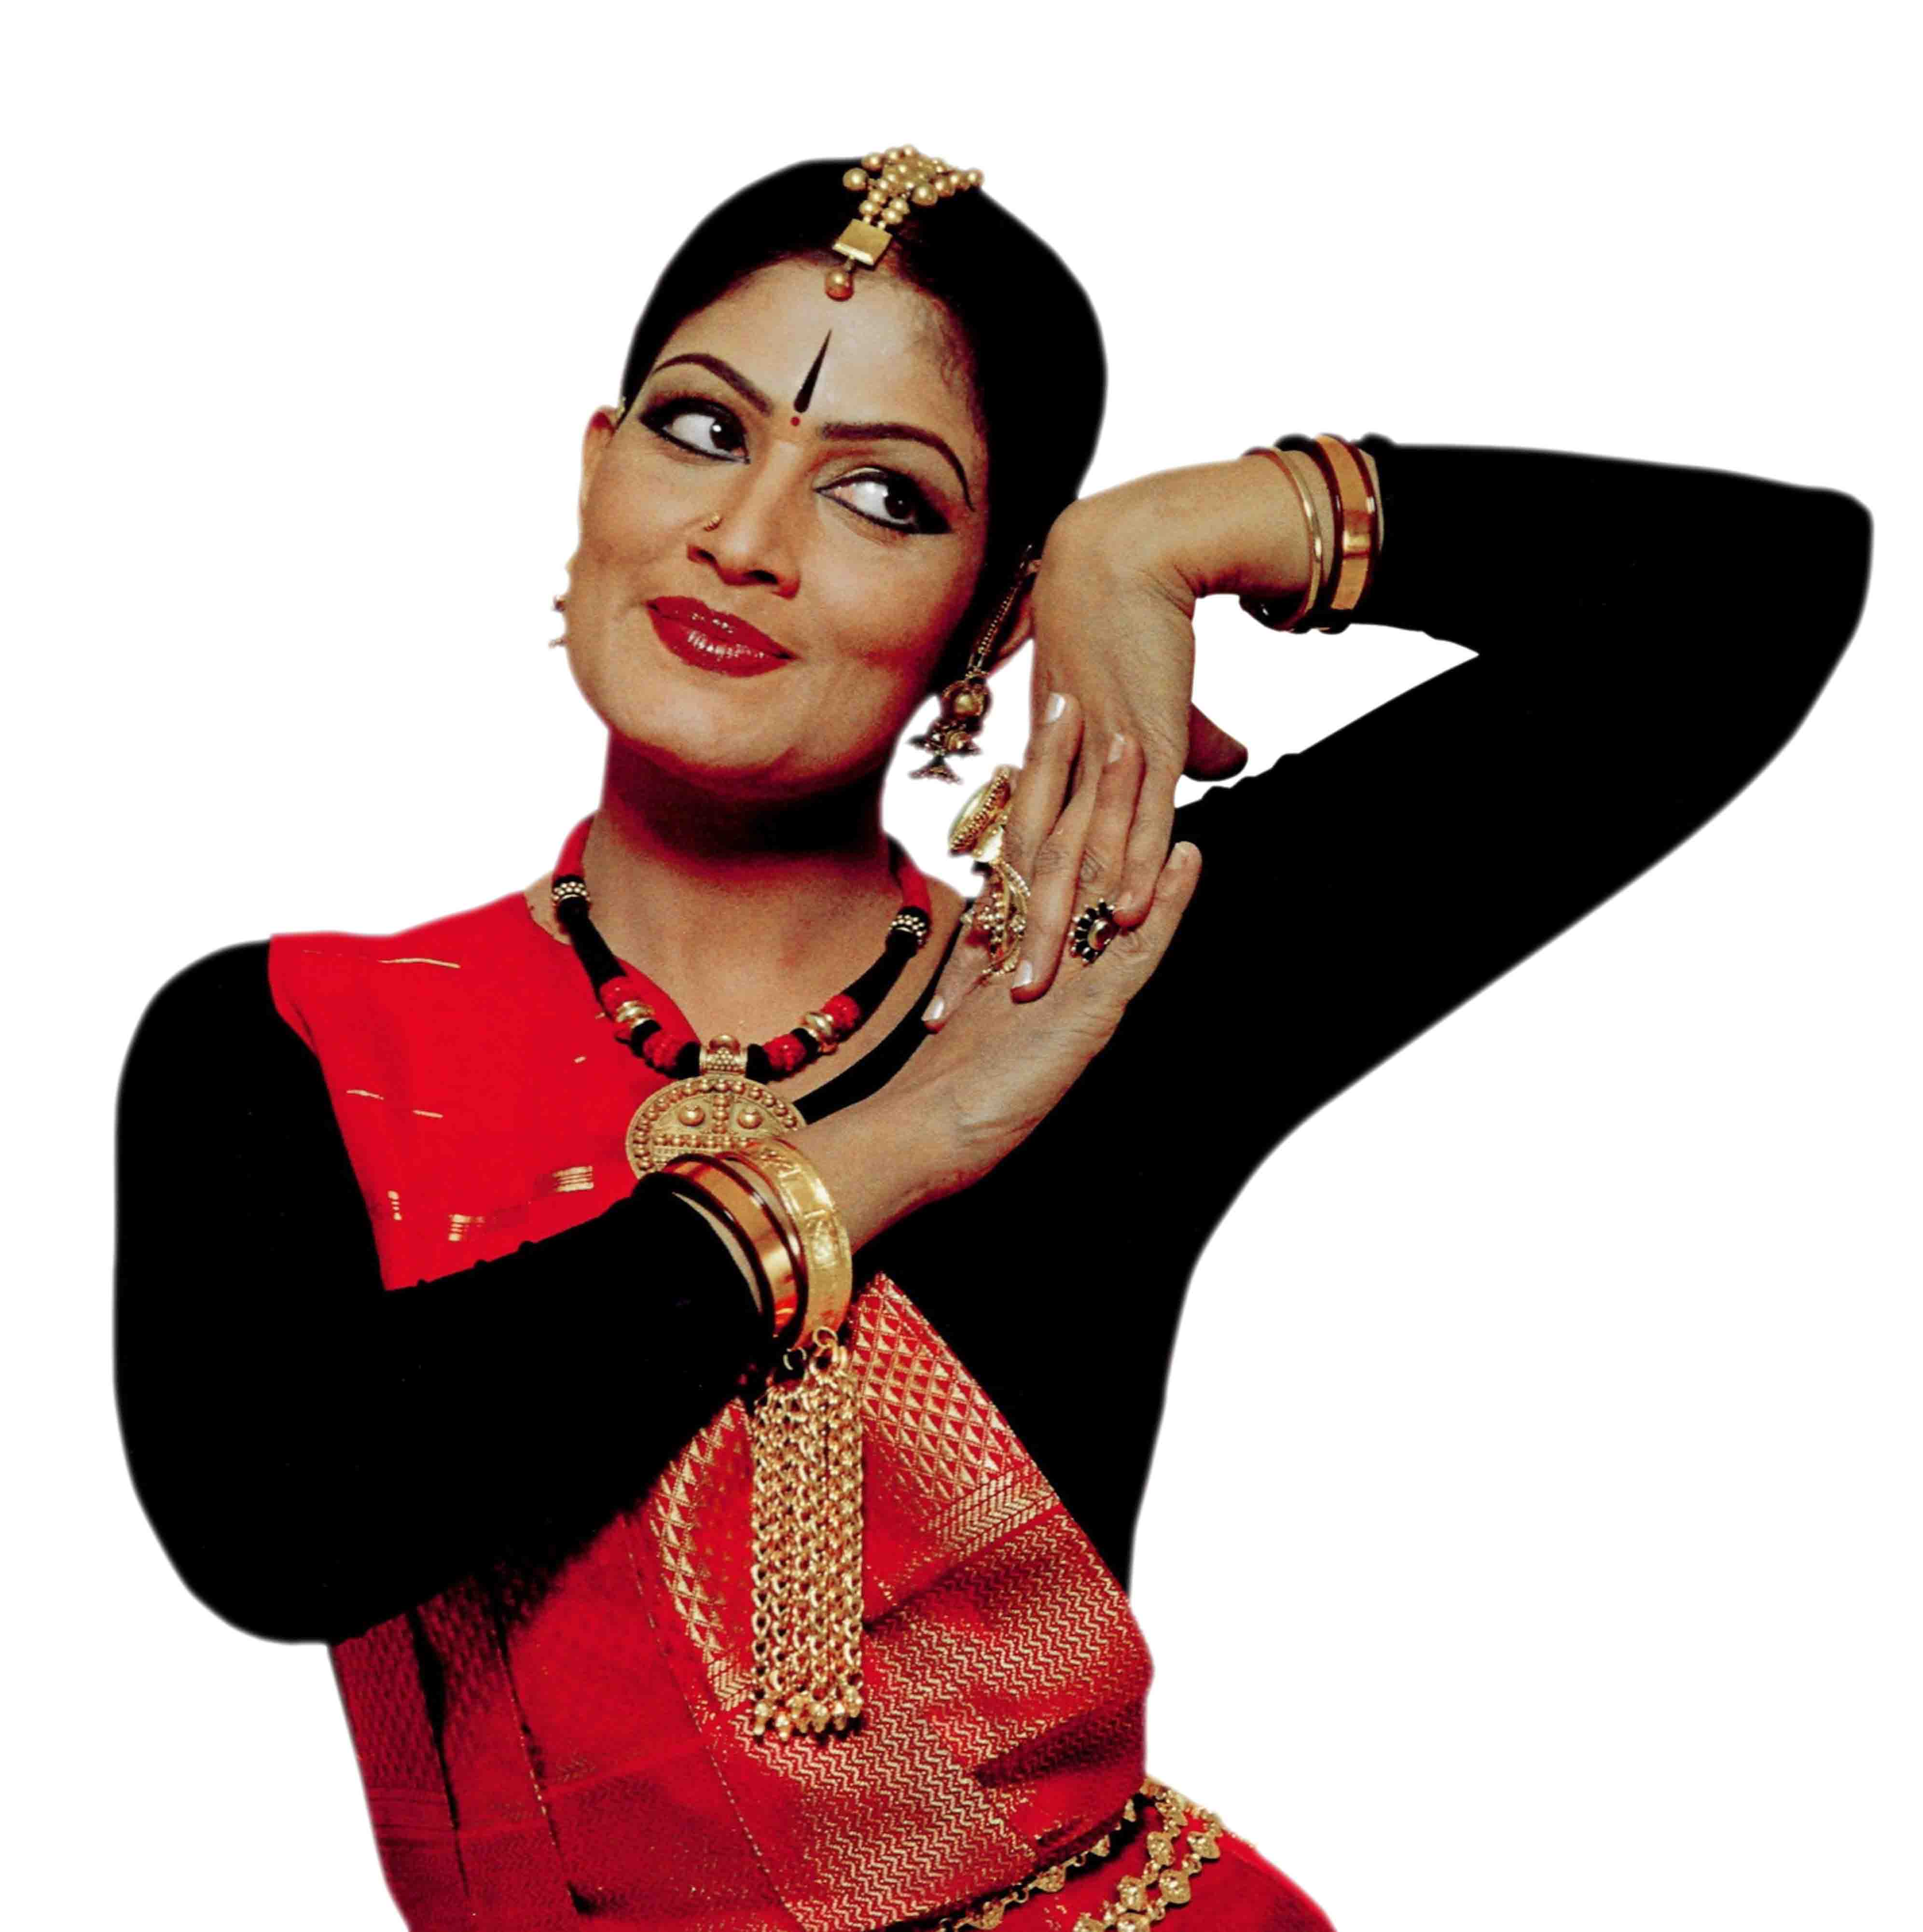 Learner, performer, and teacher; the many roles of Padma Shree Geeta Chandran